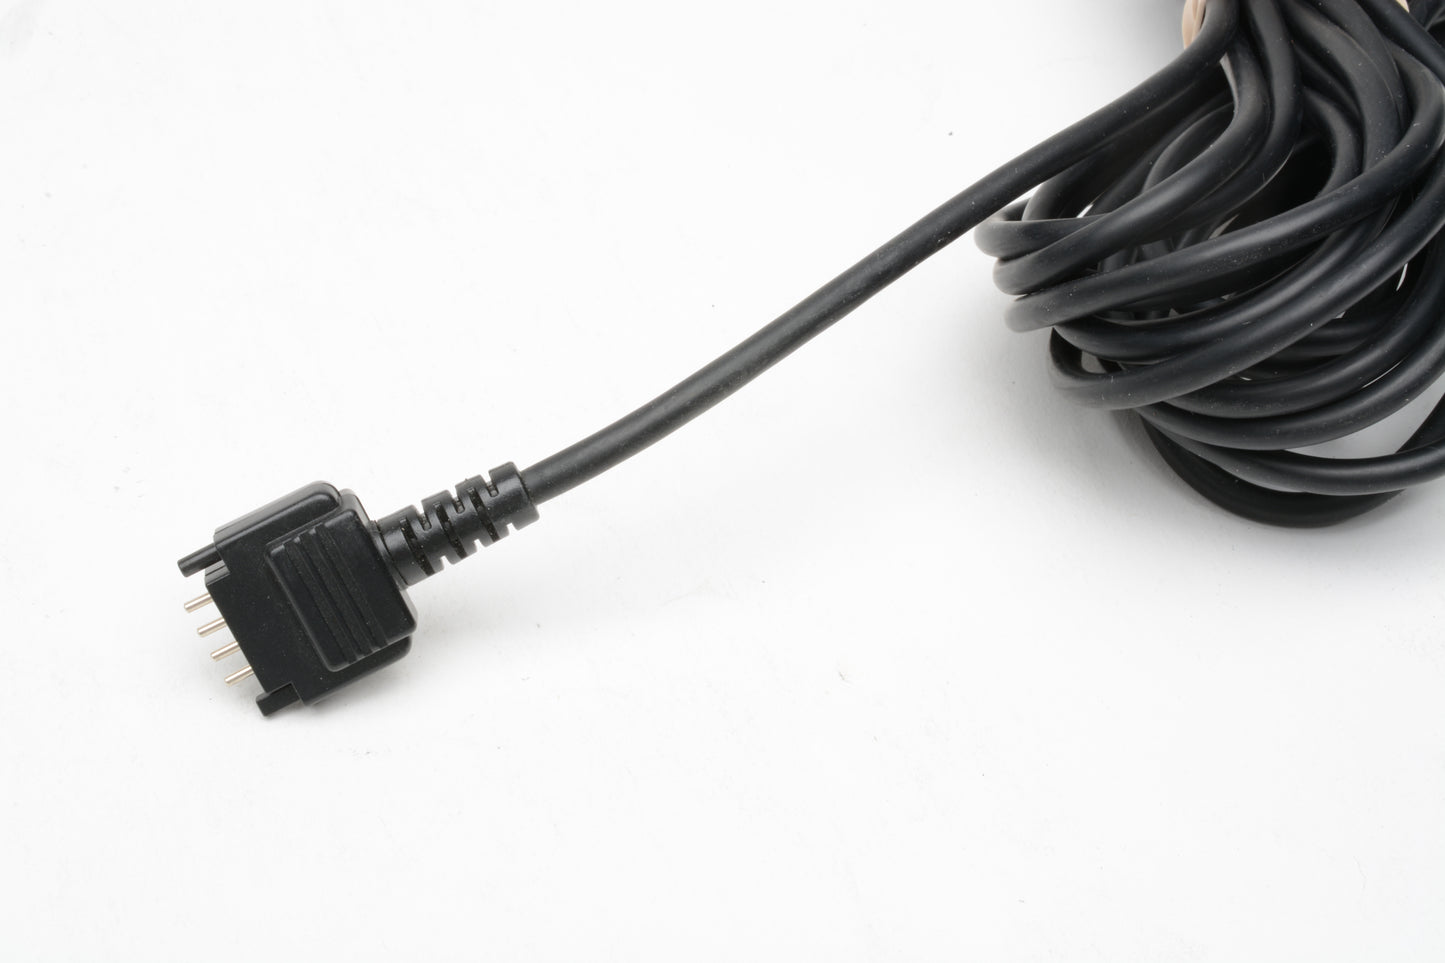 Minolta EC-1000 10 Foot Extension Cable for Control Grip CG-1000, clean